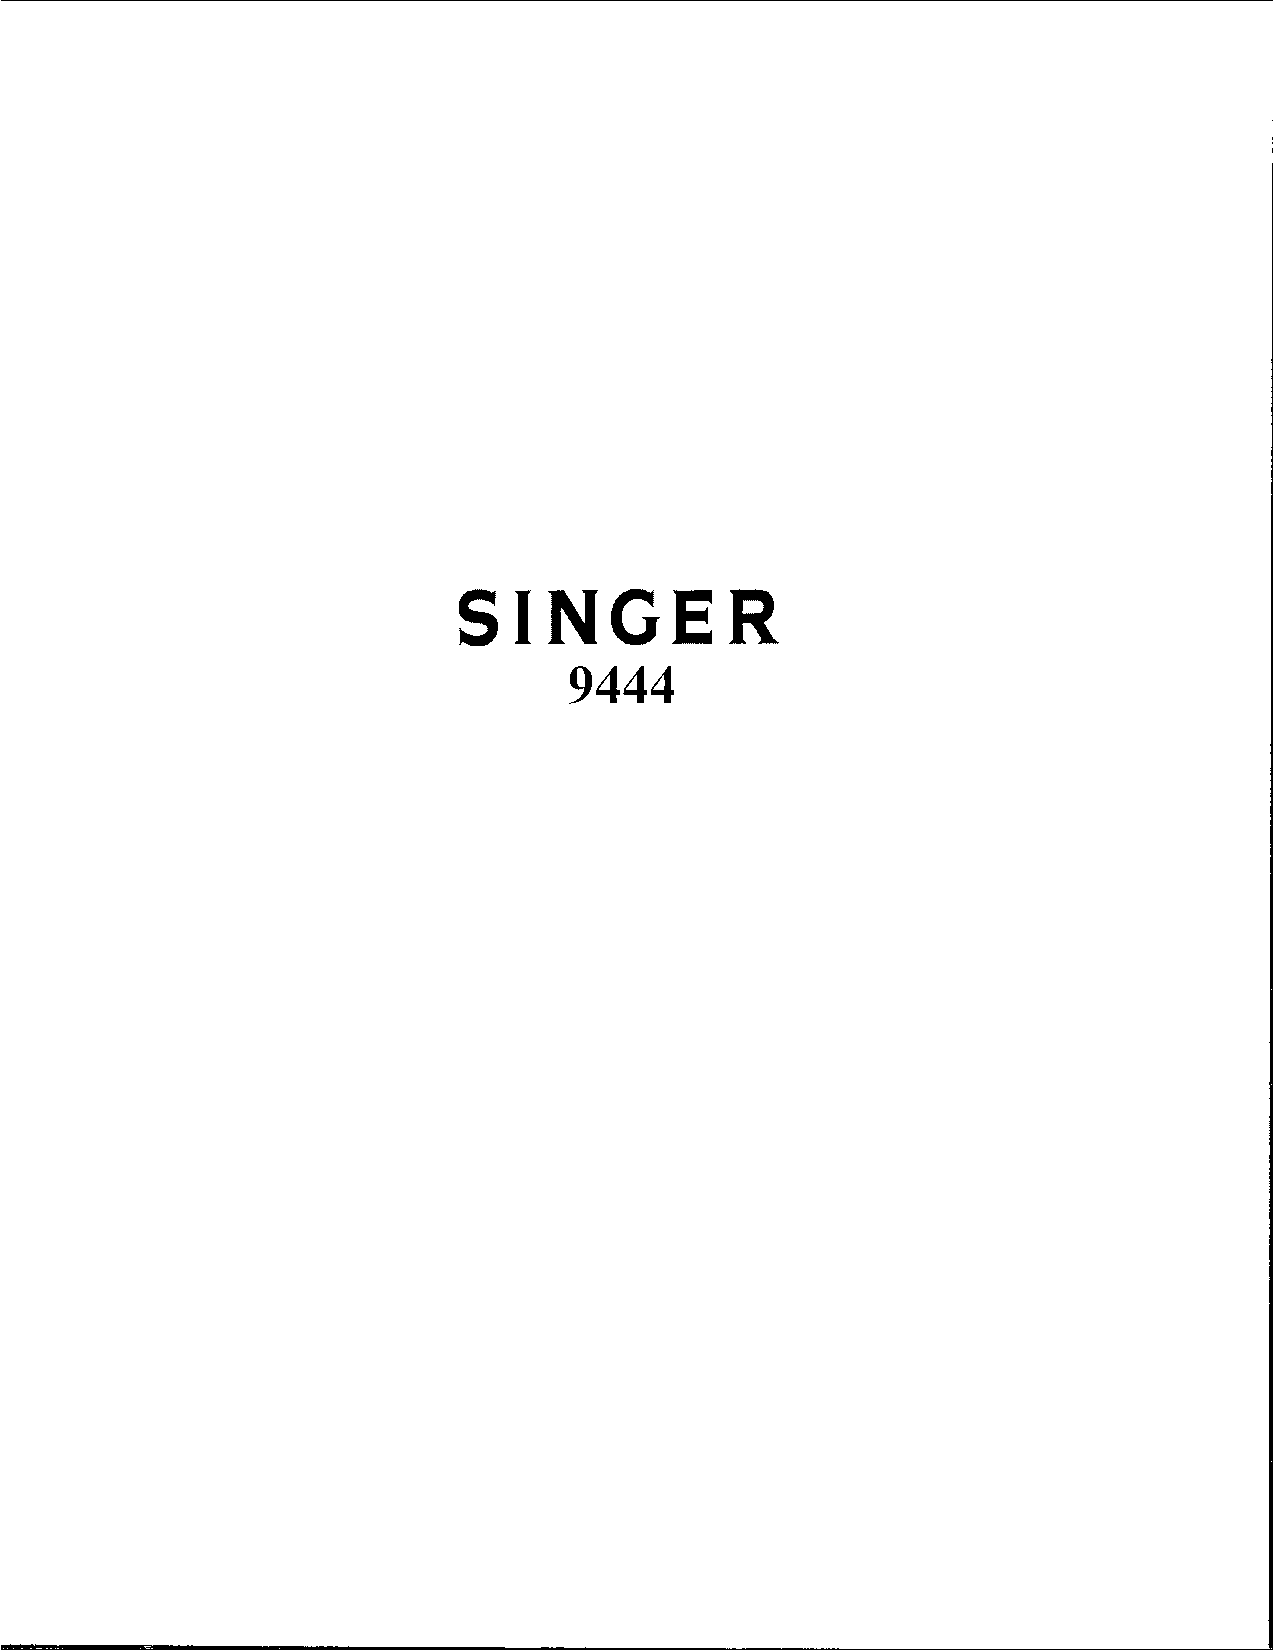 Singer 9444 User Manual